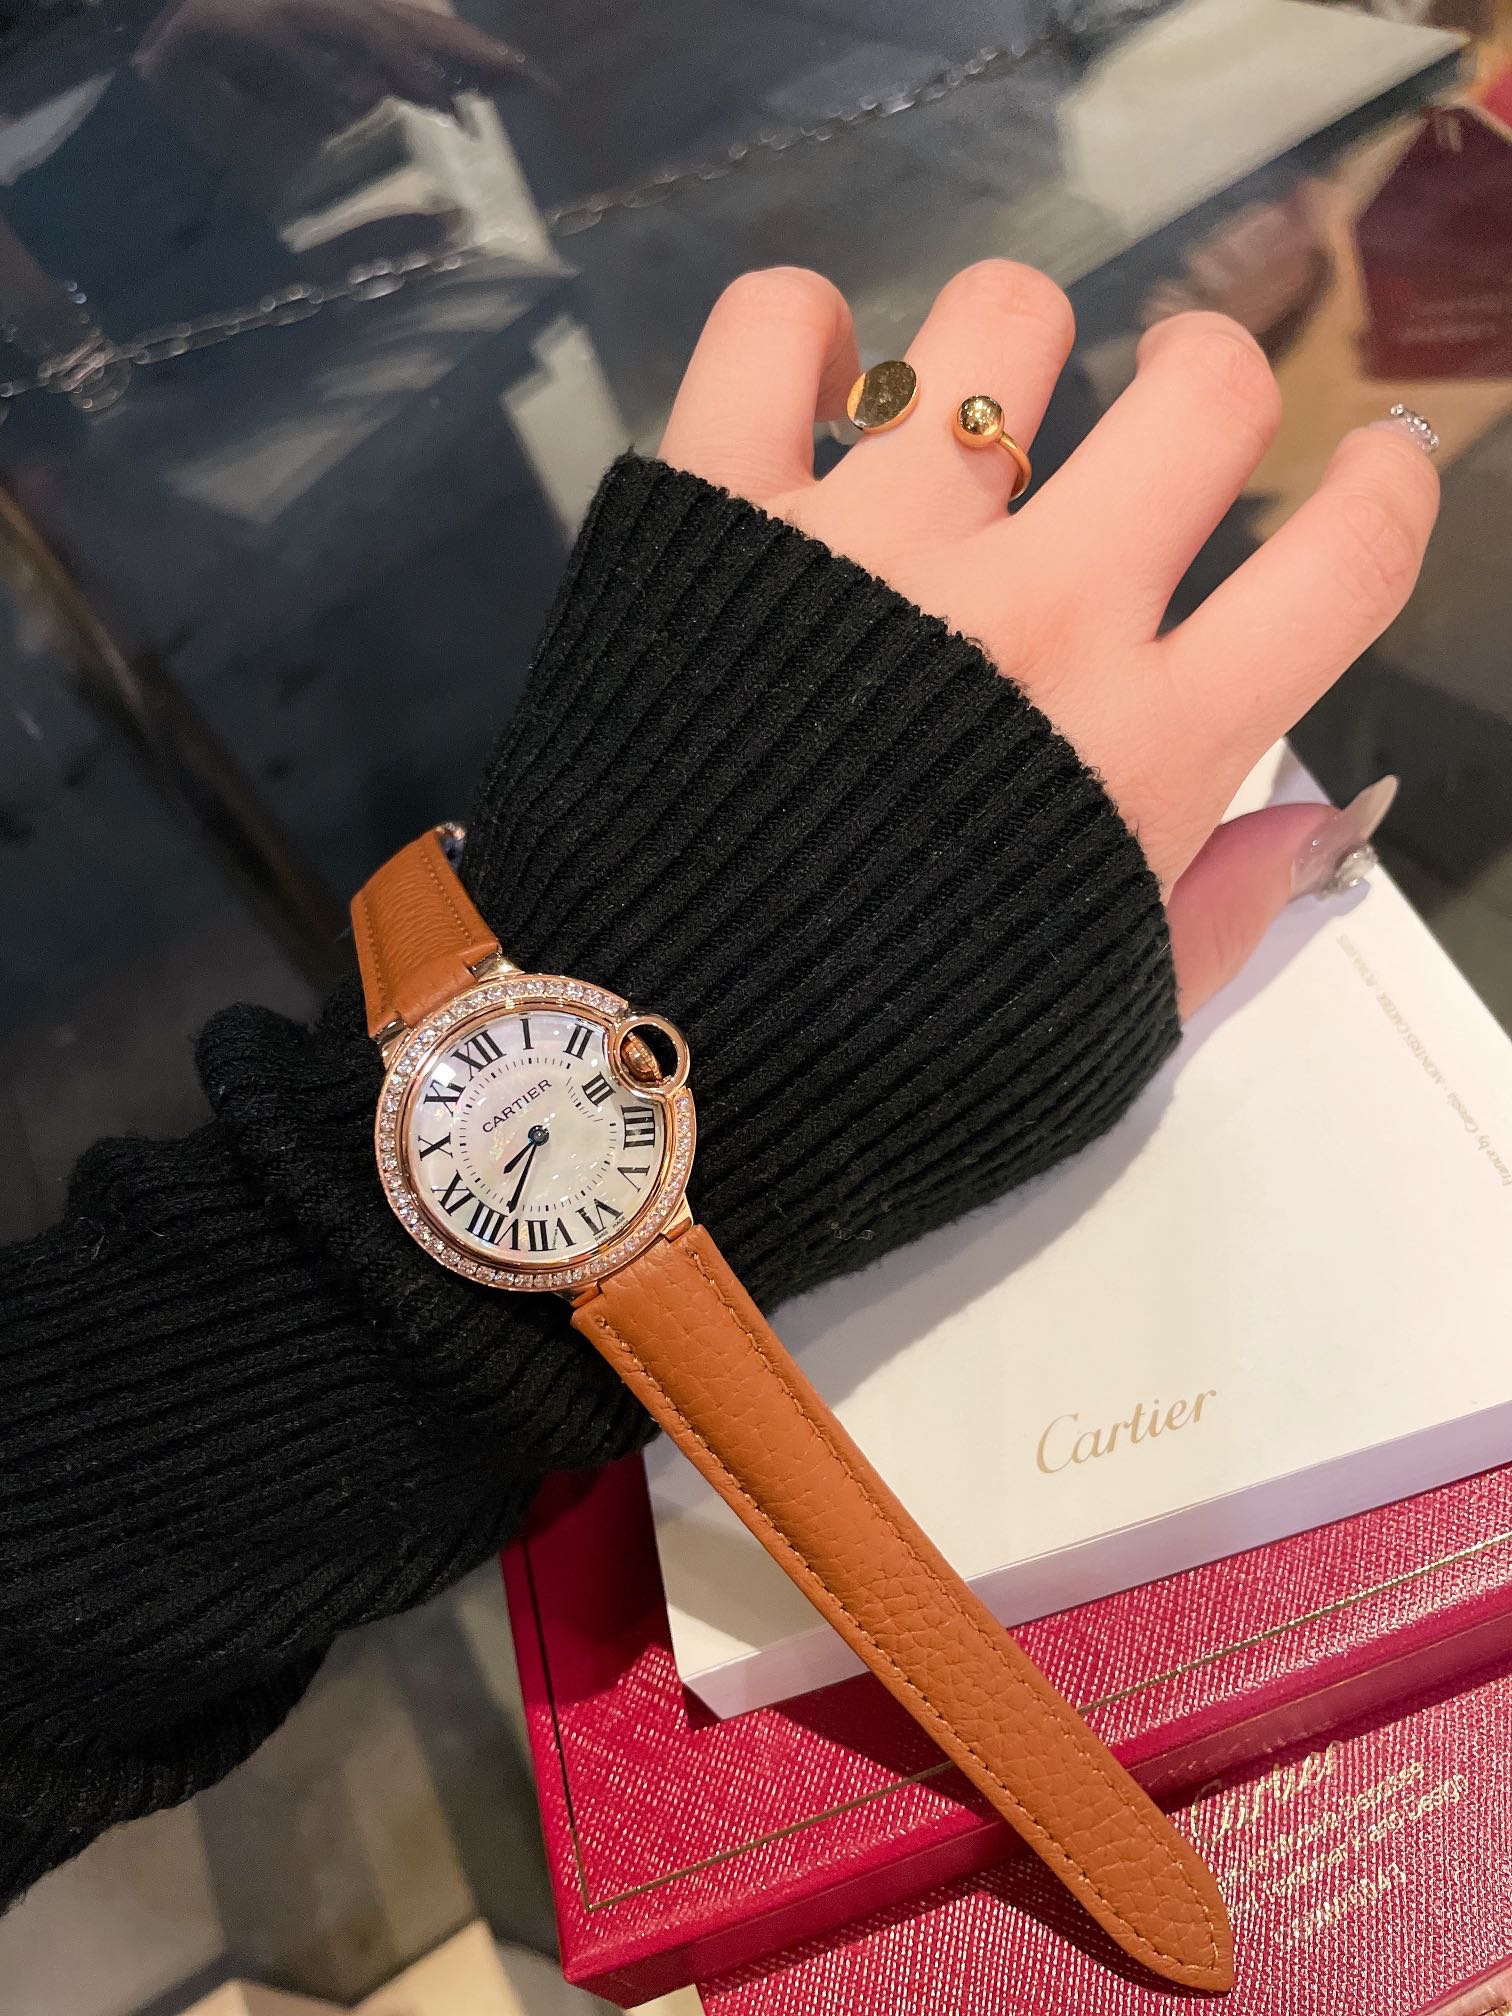 CARTIERカルティエ 腕時計 並行輸入コピー フランス 薄い腕時計 レザー 水晶ダイヤモンド 新商品 限定品 ブラウン_5